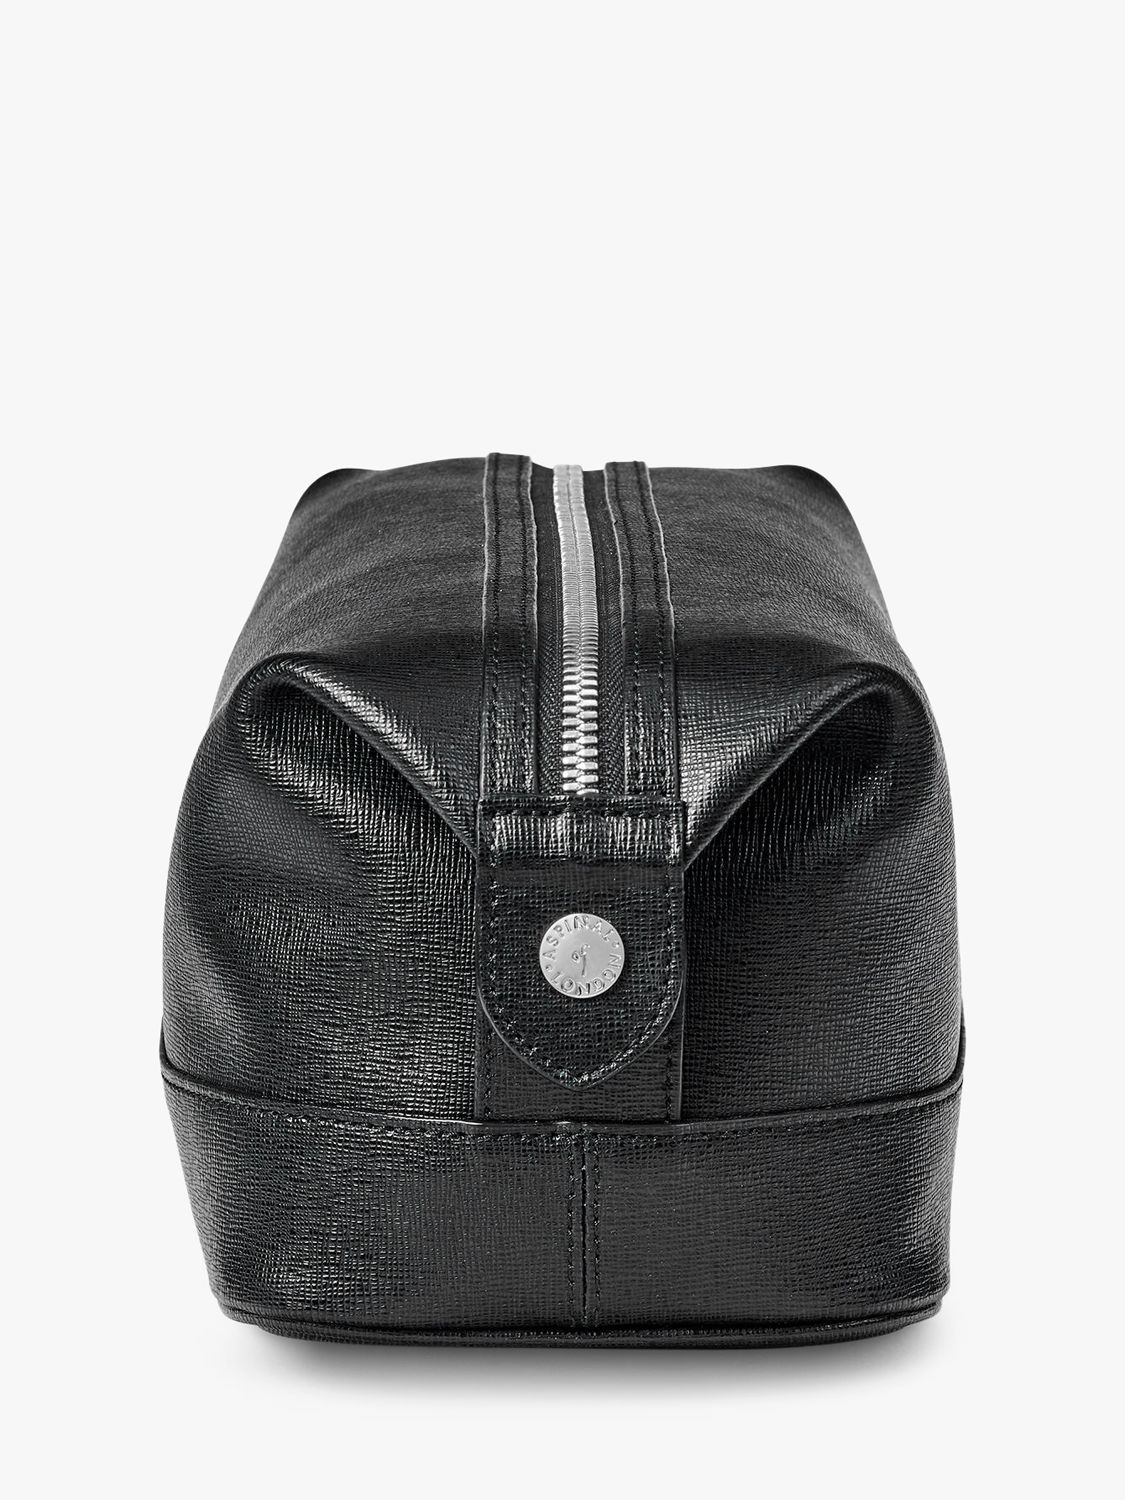 Aspinal of London Saffiano Leather Wash Bag, Black 4